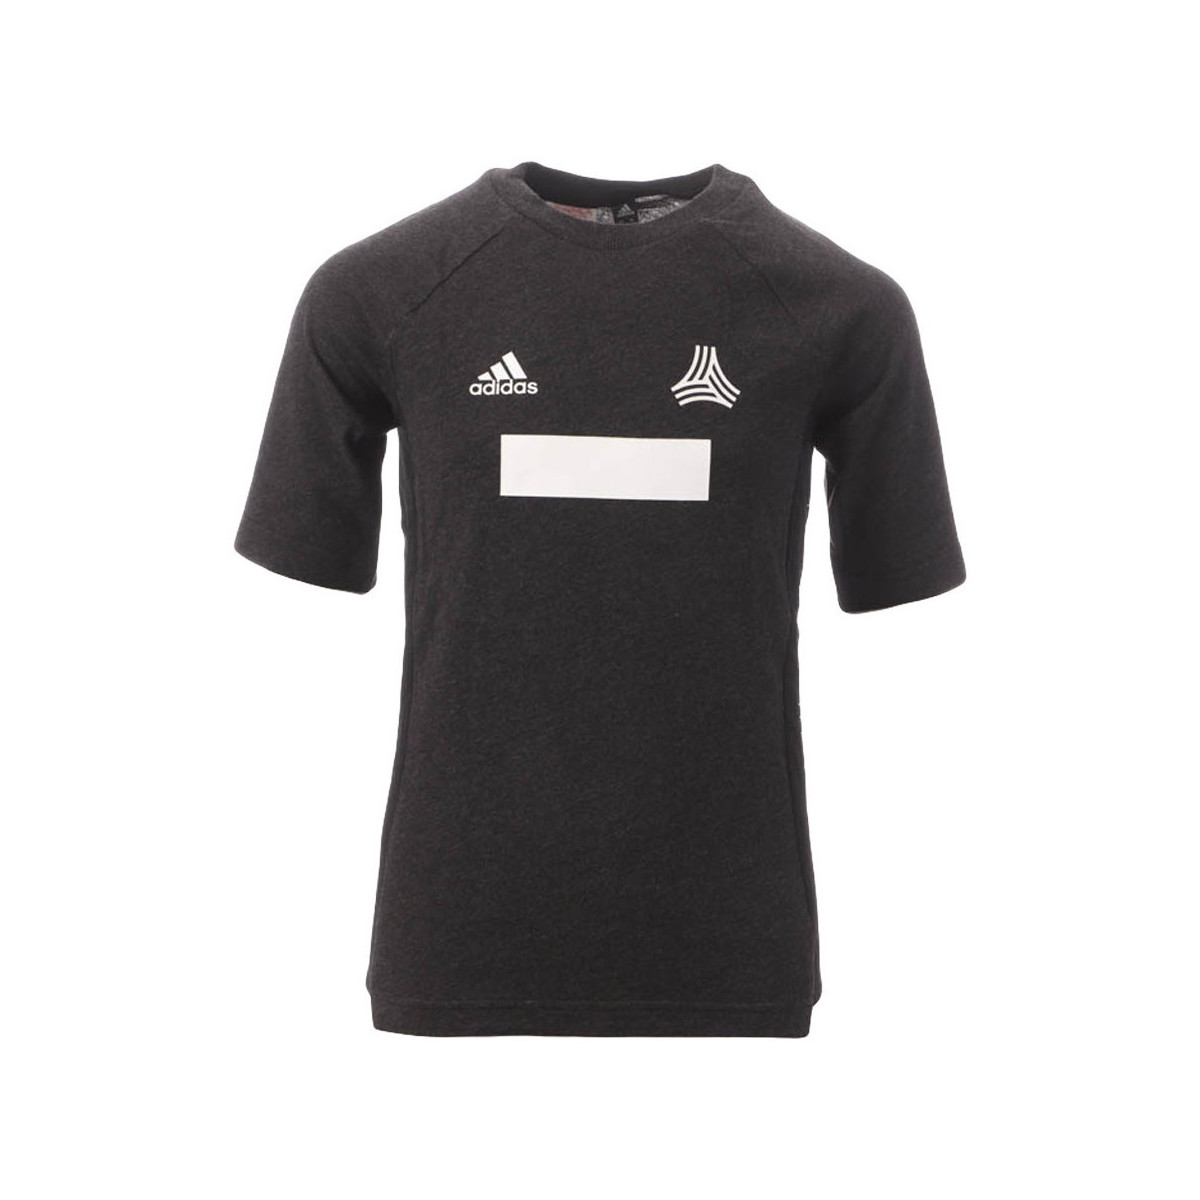 Kleidung Jungen T-Shirts & Poloshirts adidas Originals FL1388 Schwarz